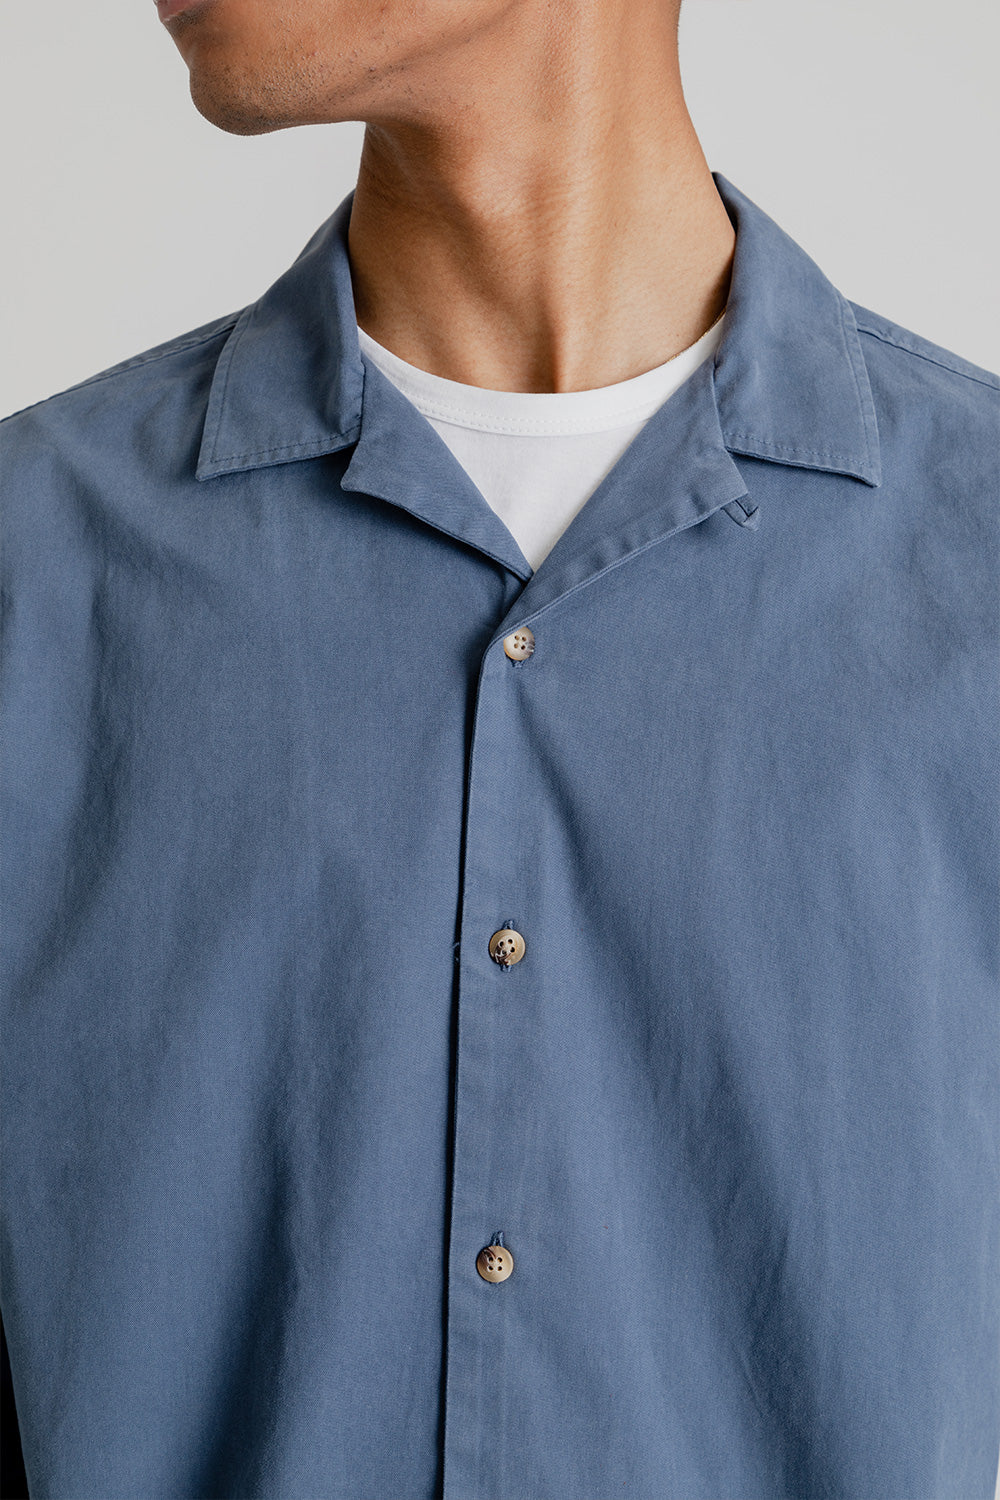 Kestin Tain Shirt in French Blue